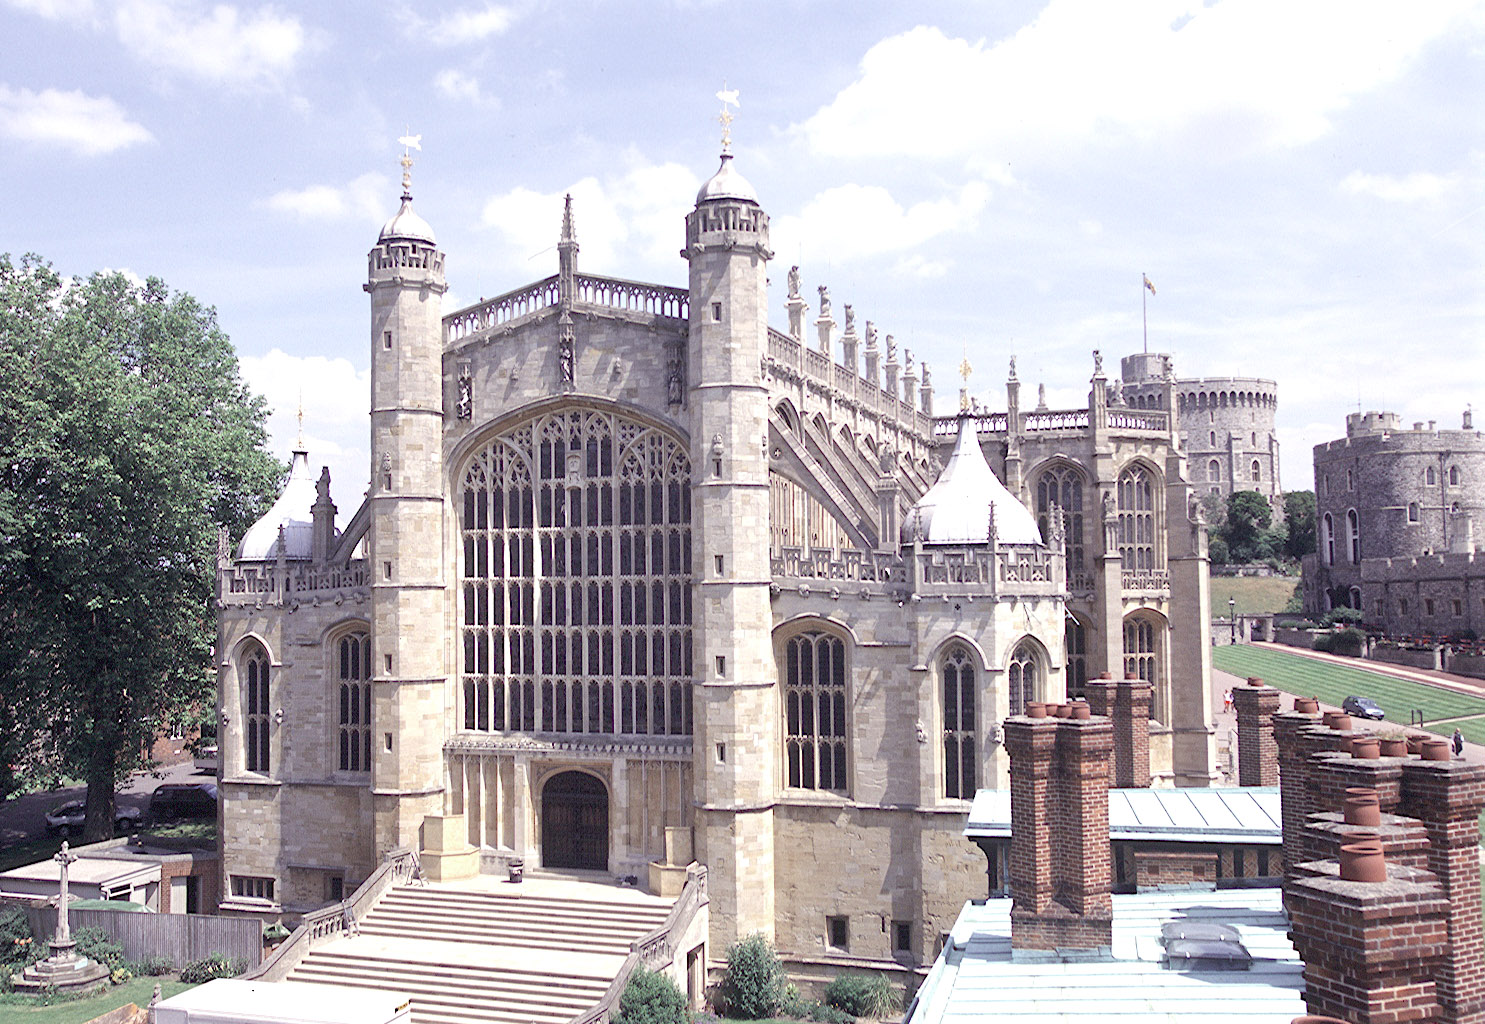 St. George’s Chapel Windsor Castle Getty Images